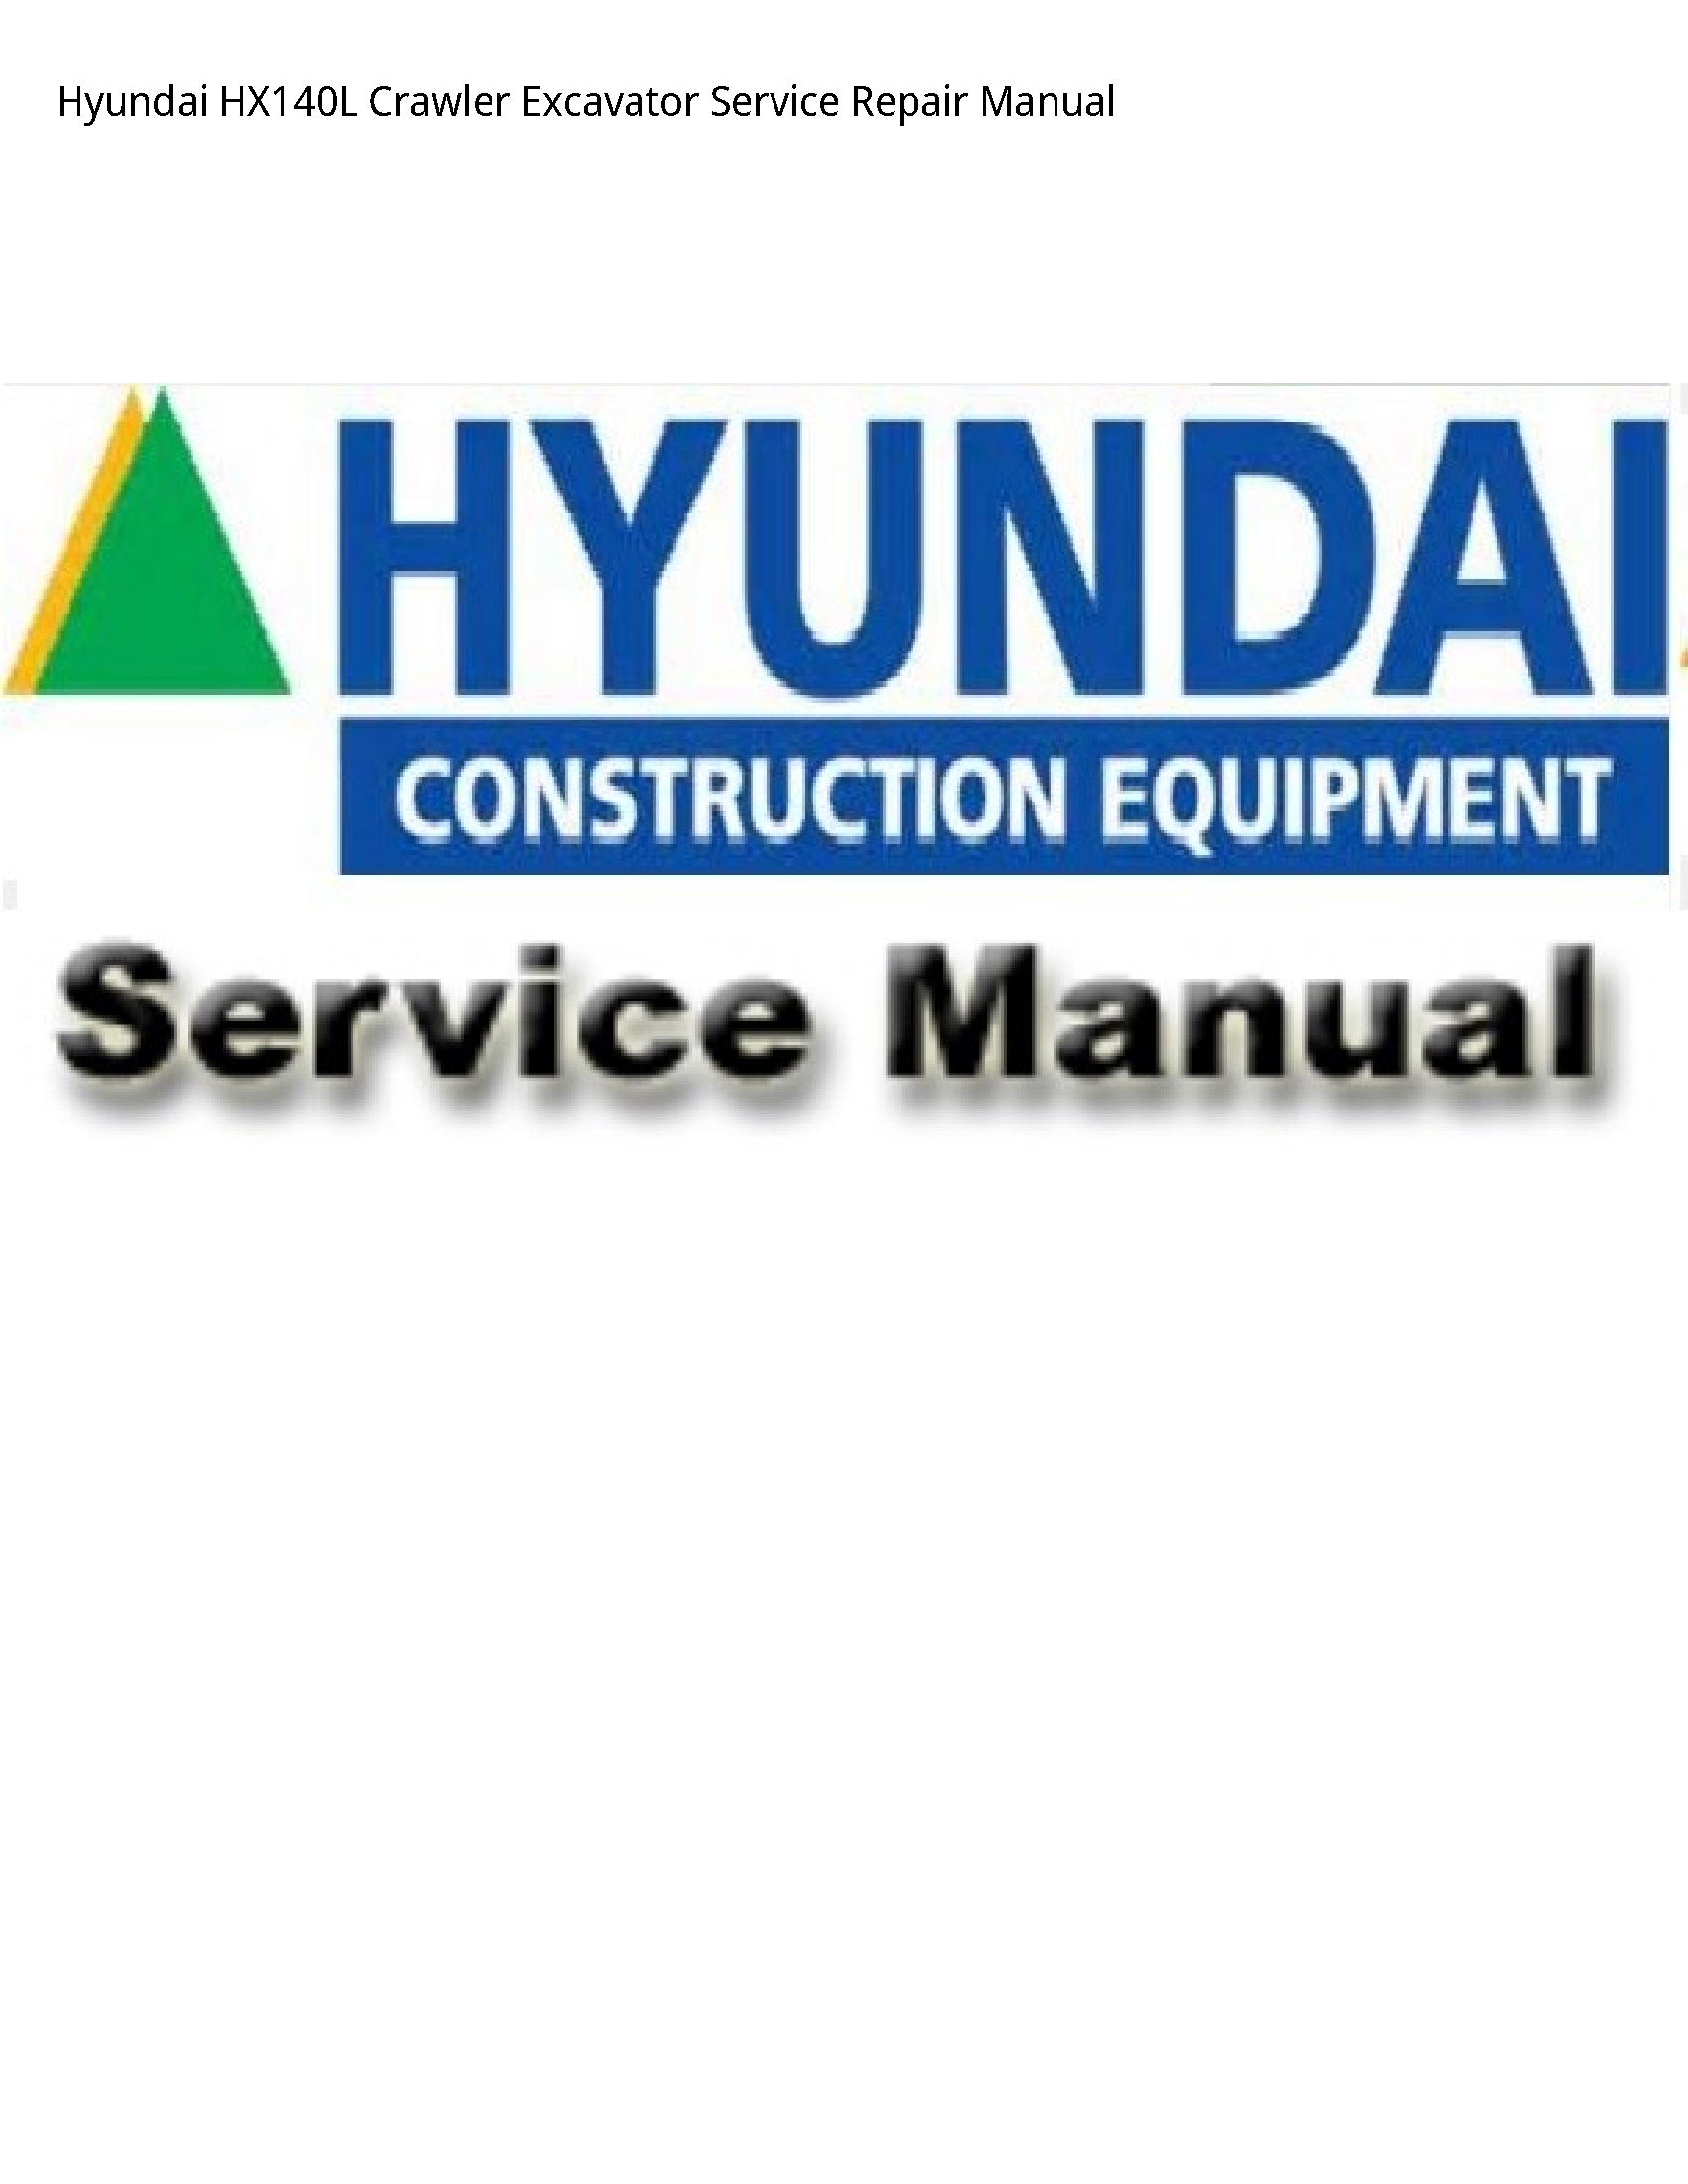 Hyundai HX140L Crawler Excavator manual